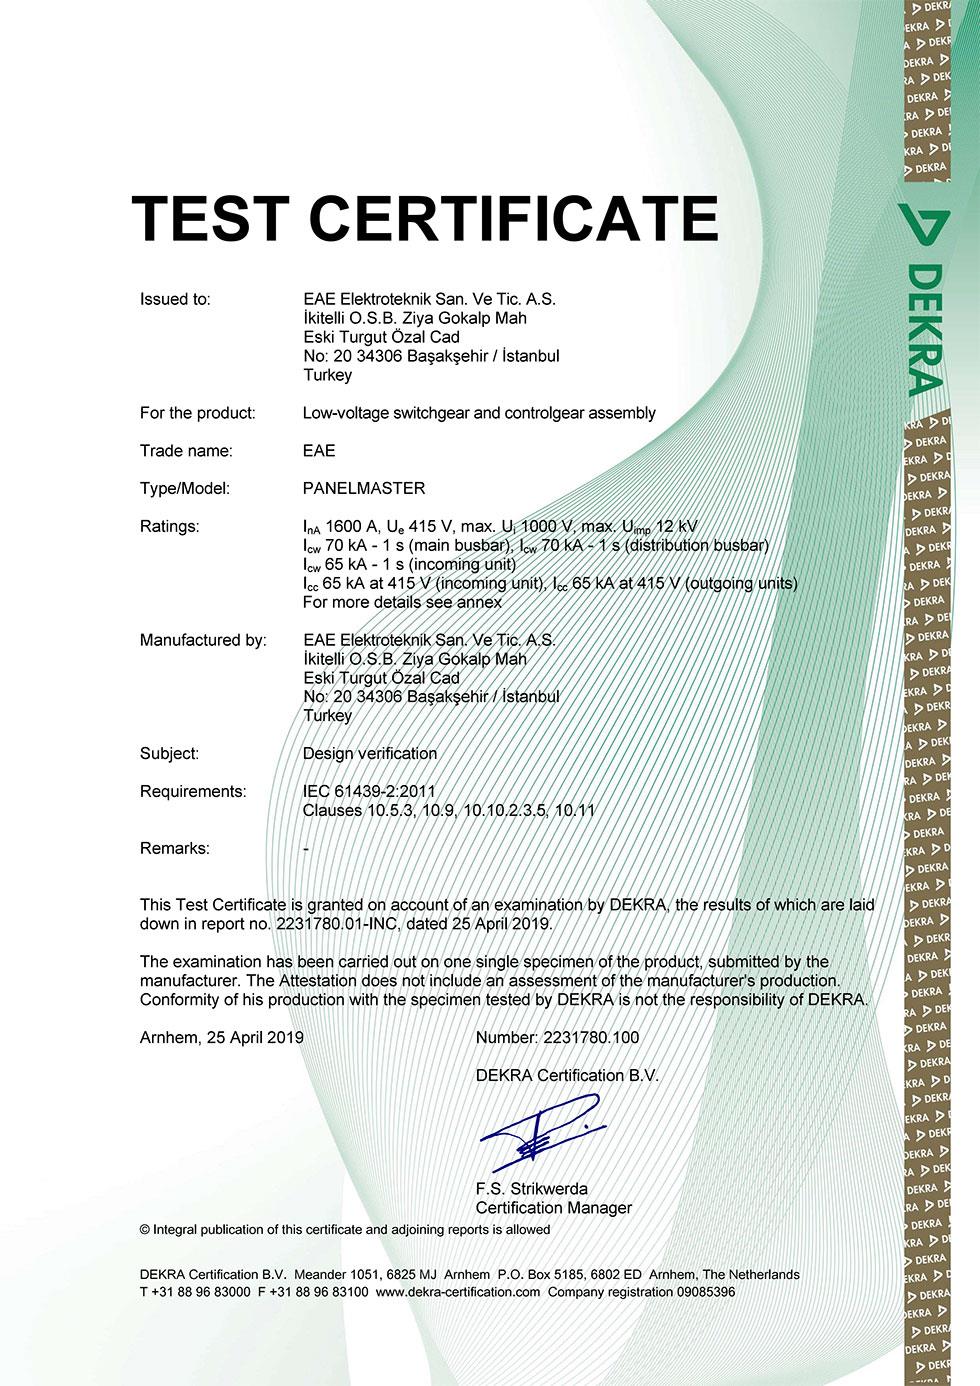 PanelMaster IEC 61439 Type Test Certificate (Mitsubishi - MCCB)